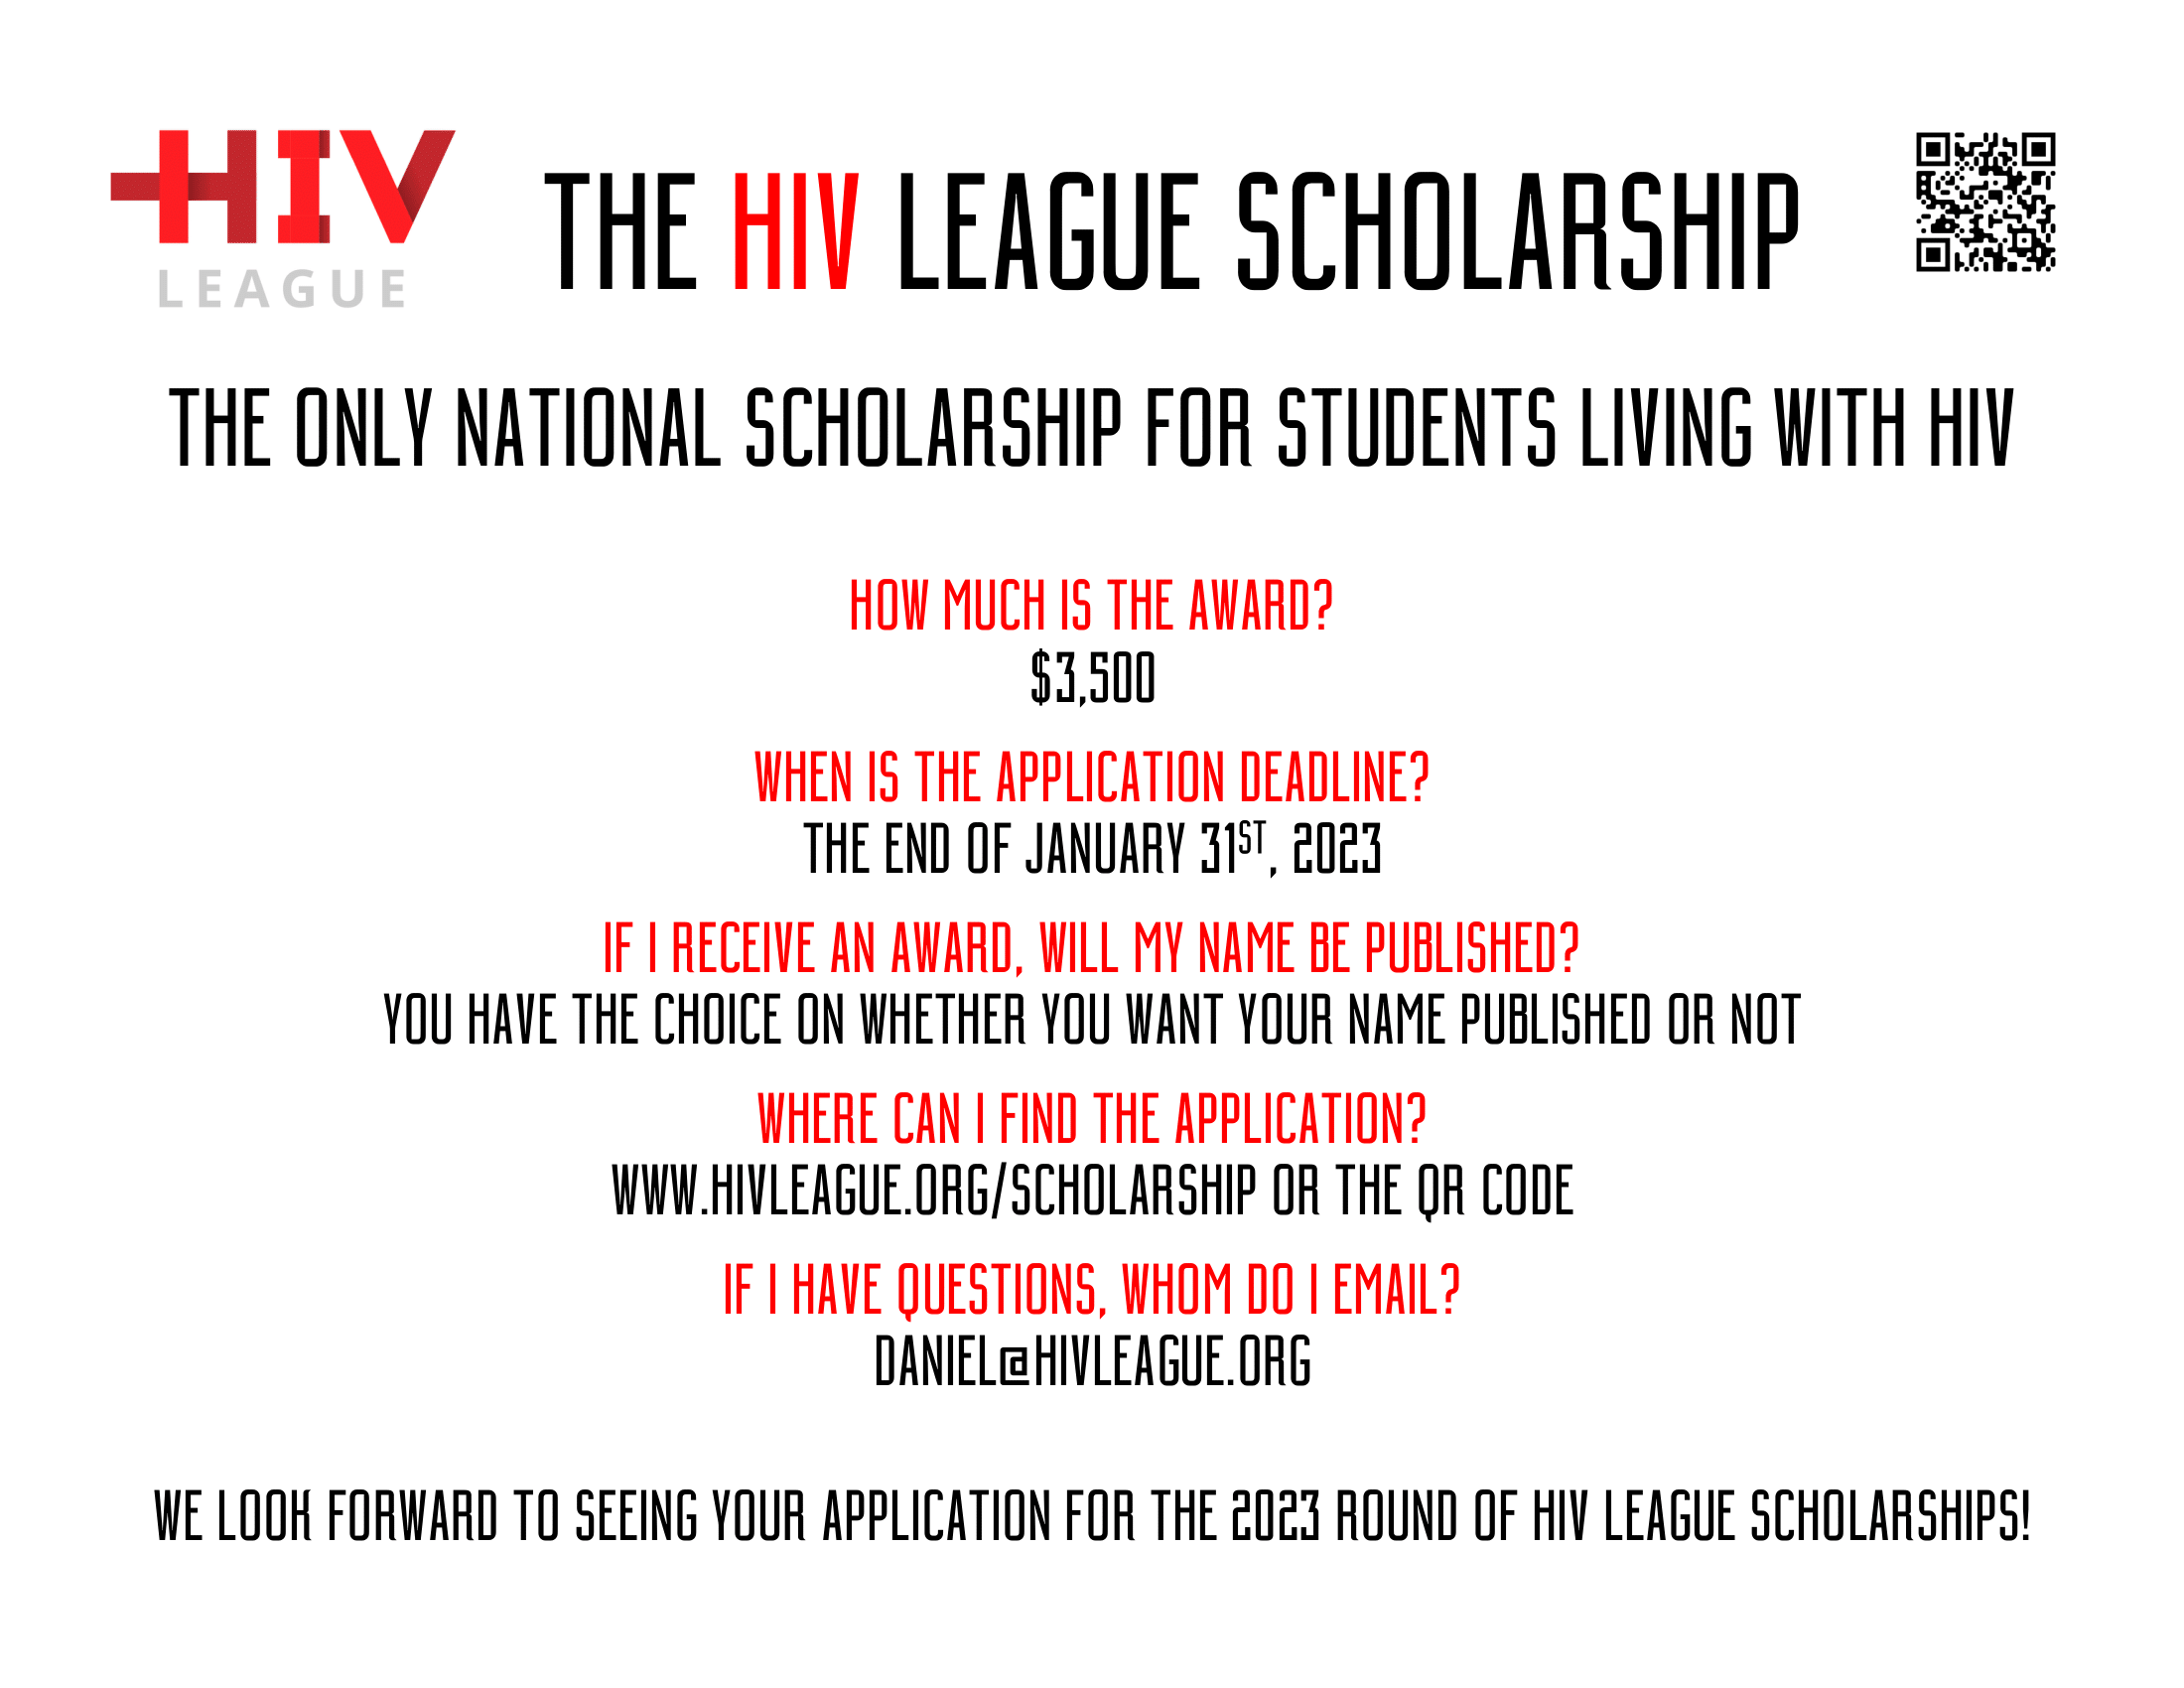 HIV League Scholarship informational flyer. 